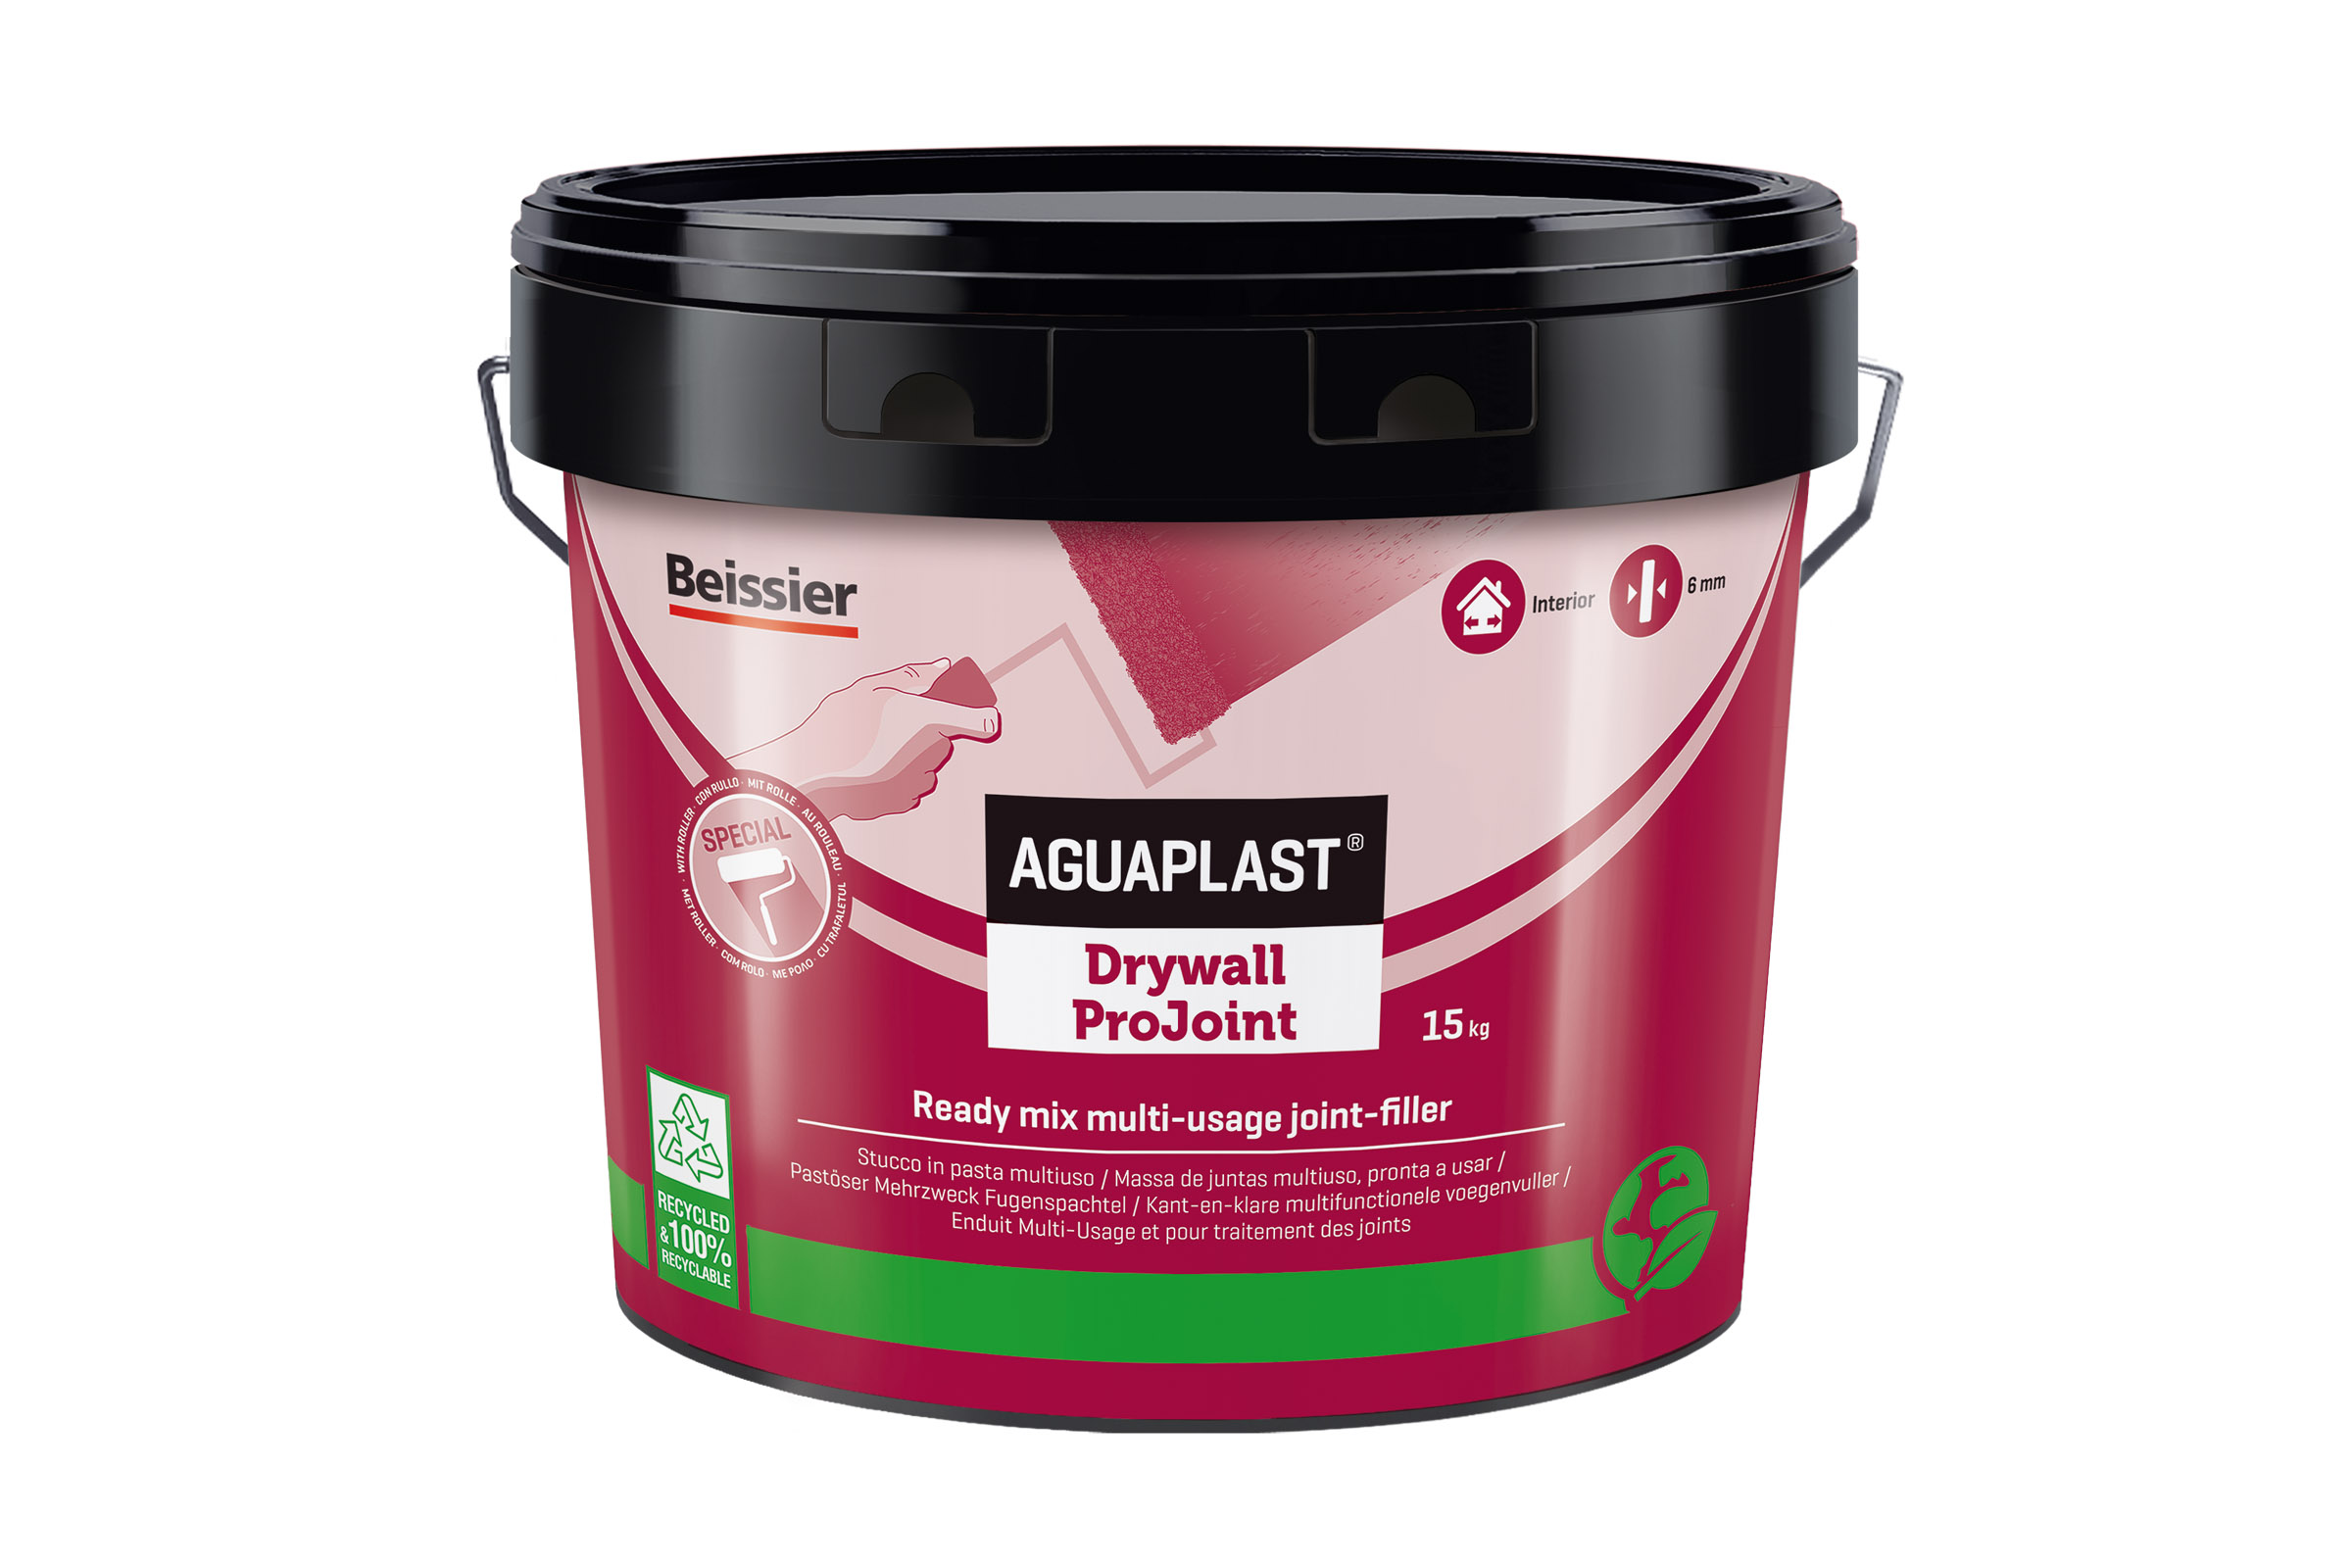 Aguaplast Drywall Projoint